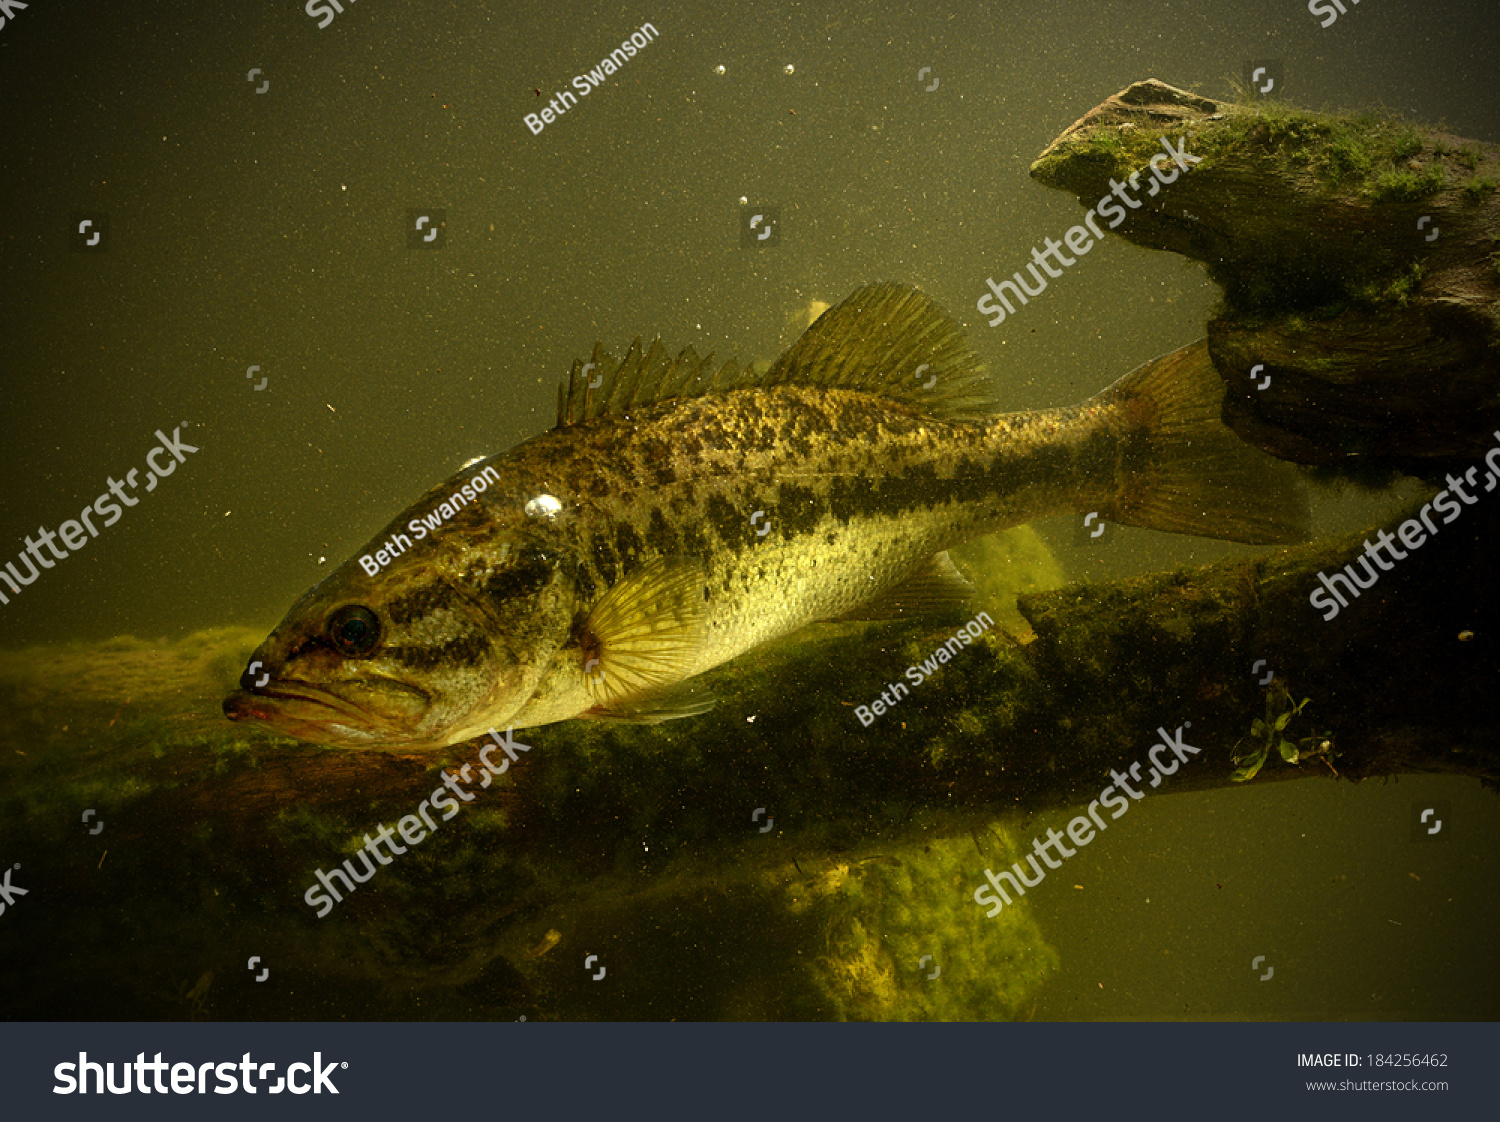 largemouth bass fish underwater in lake #184256462